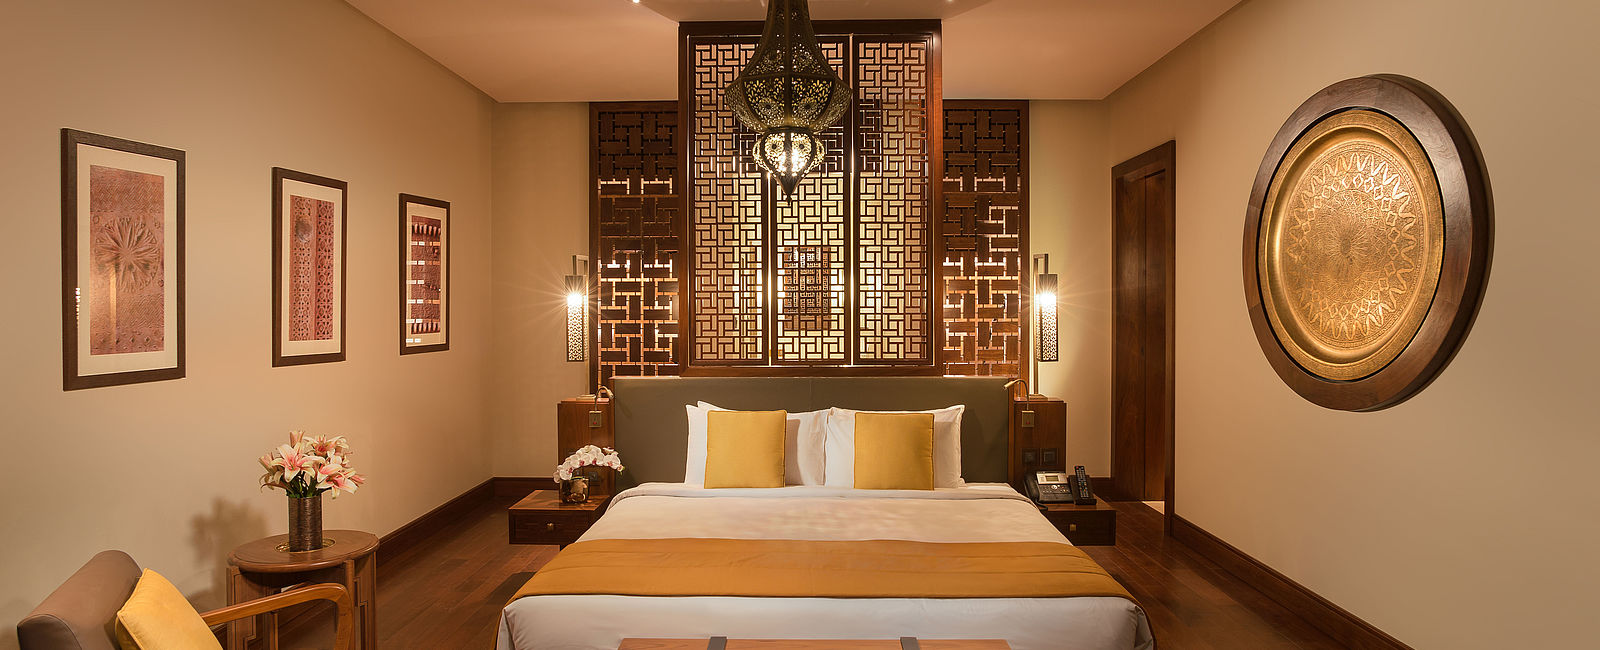 HOTEL ANGEBOTE
 Anantara Hotels, Resorts & Spas: Flash Sale -40% 
